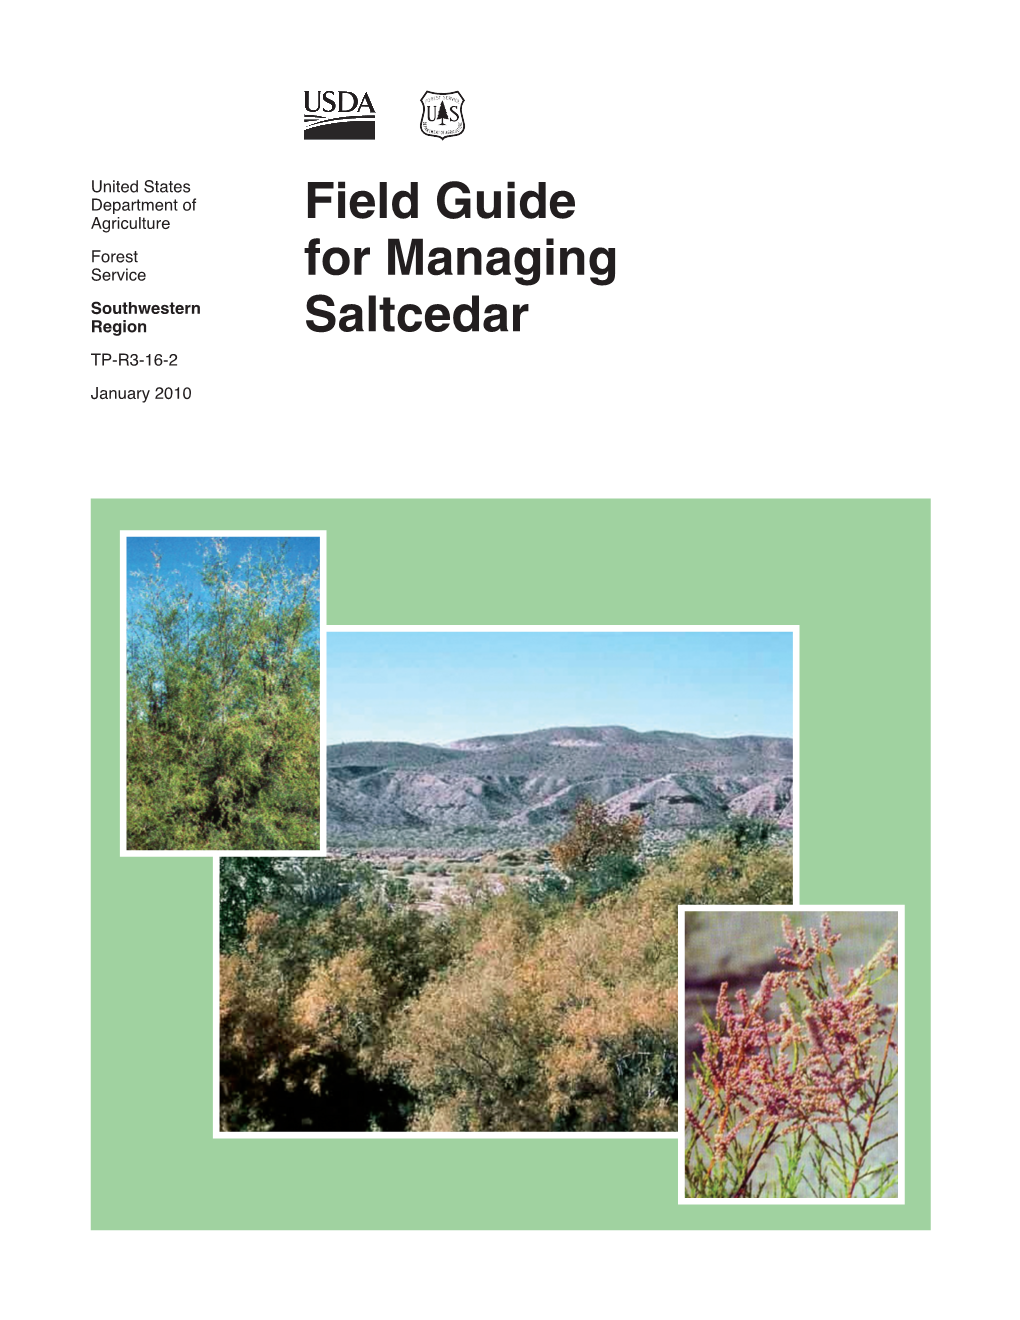 Field Guide for Managing Saltcedar